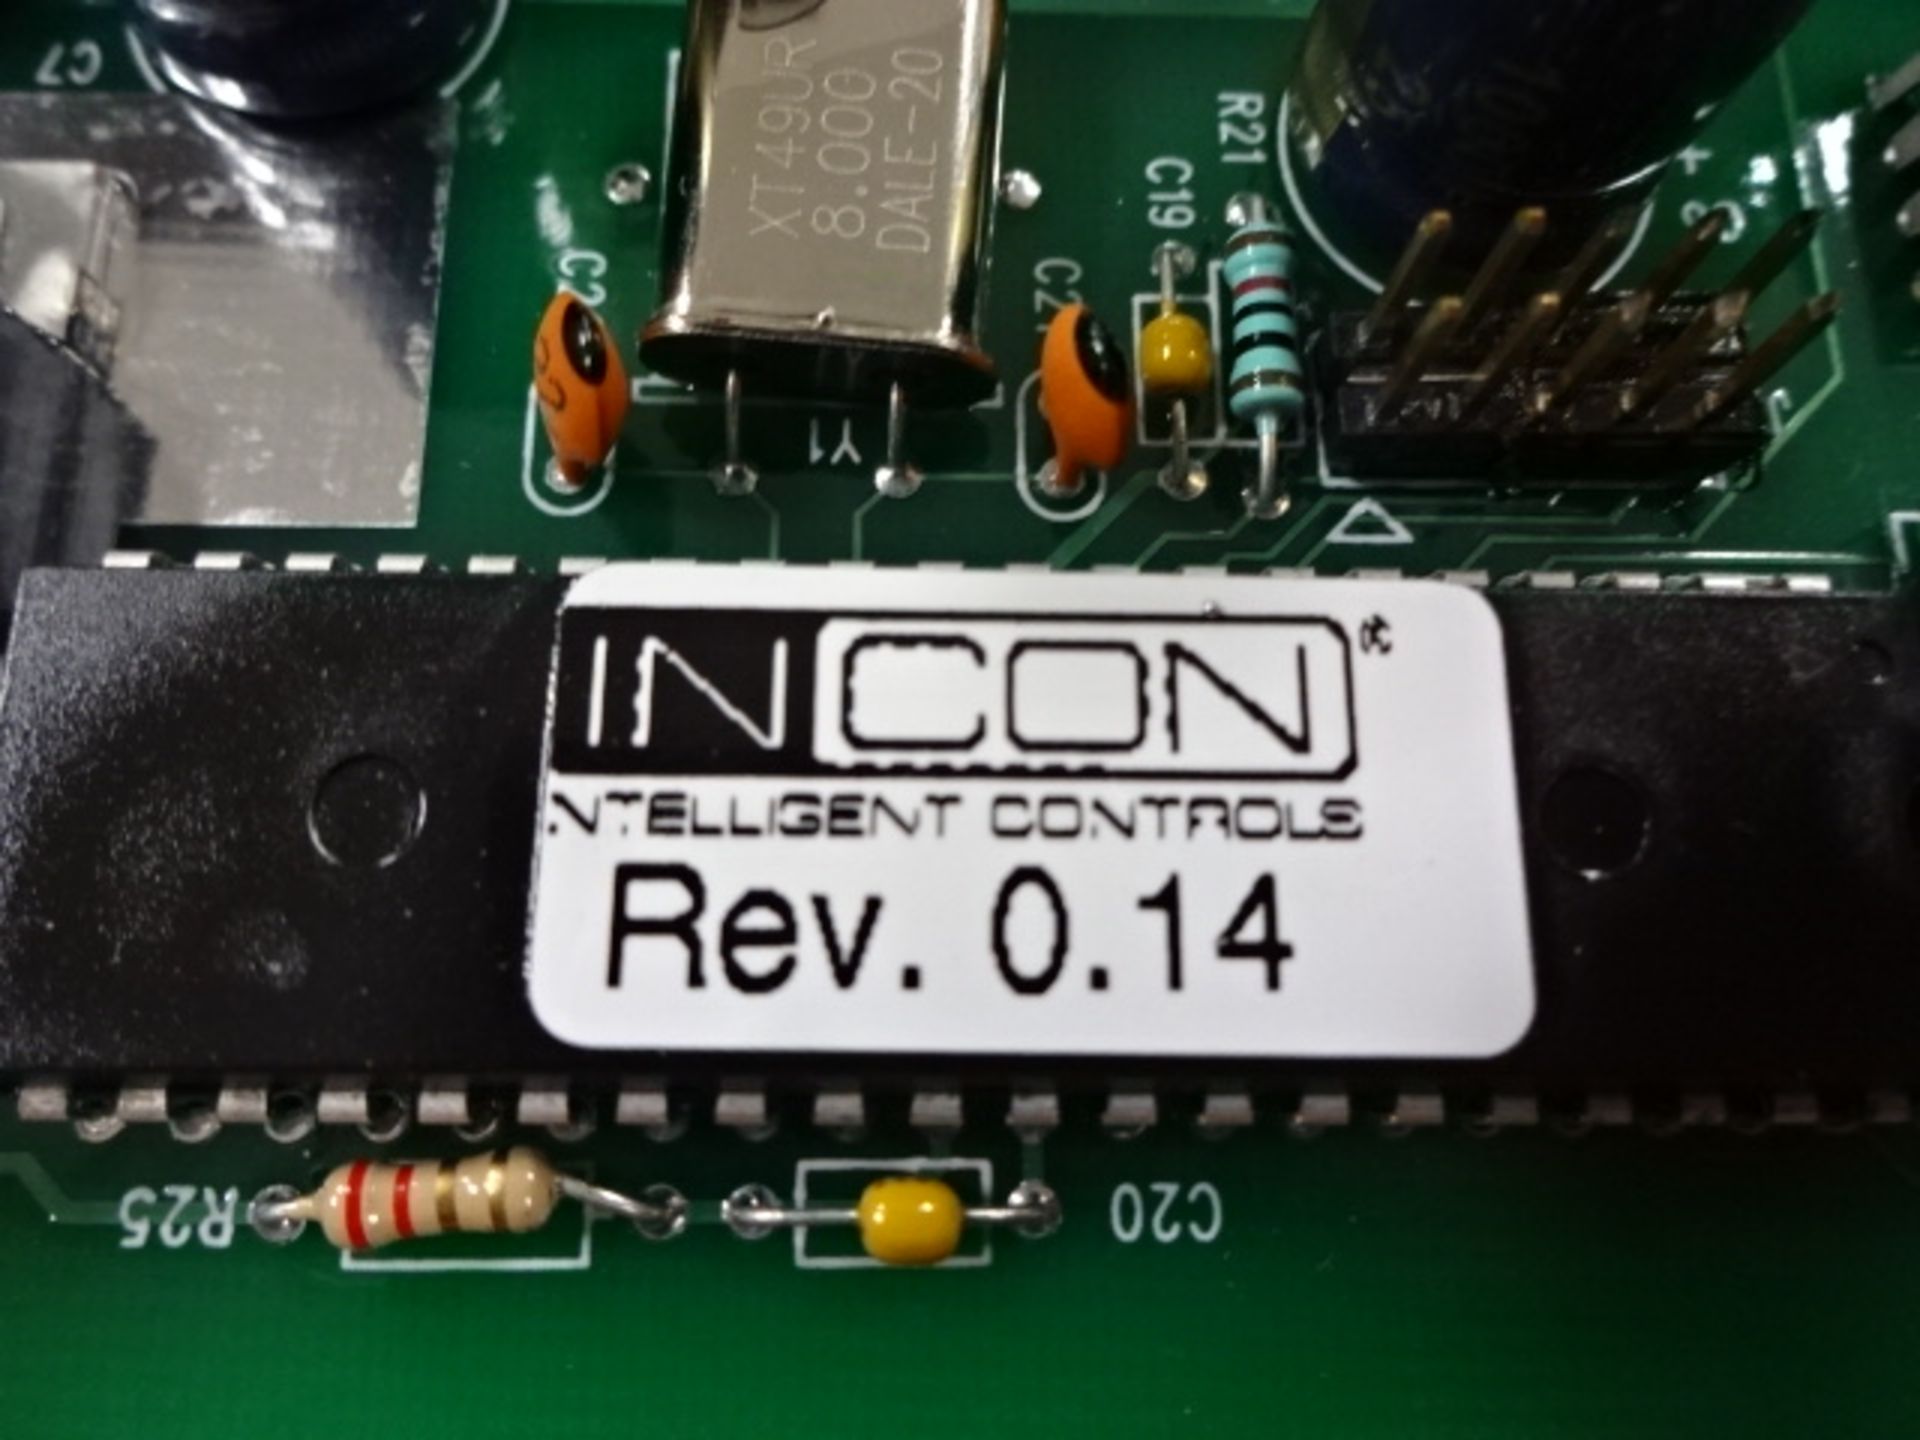 Circuit Imprimé - Electronic Board - Image 4 of 6